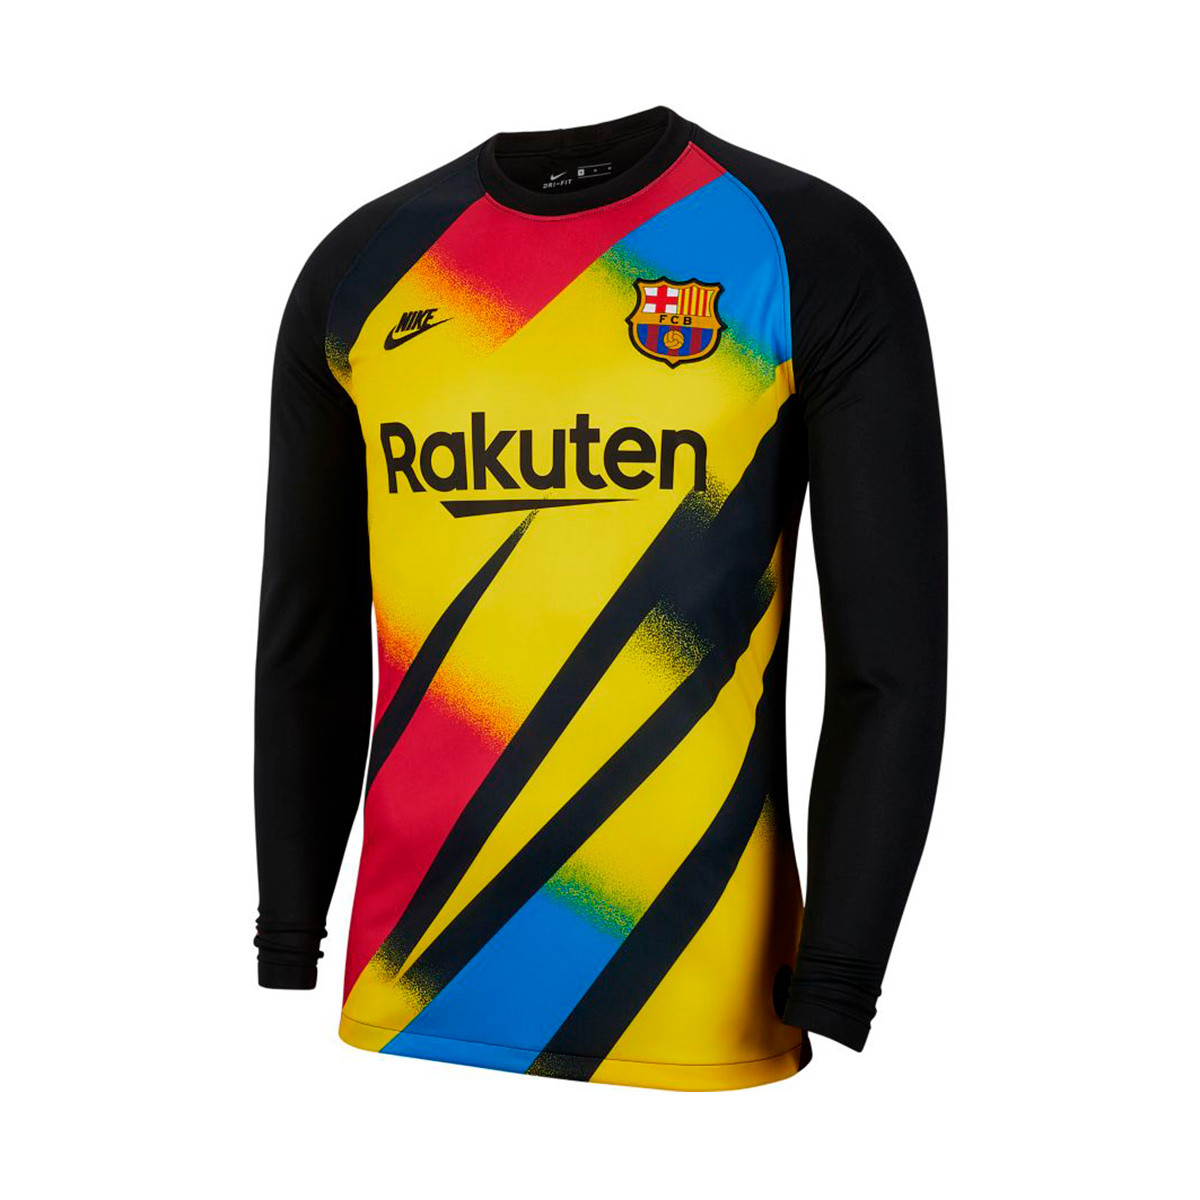 barcelona yellow jersey 2019